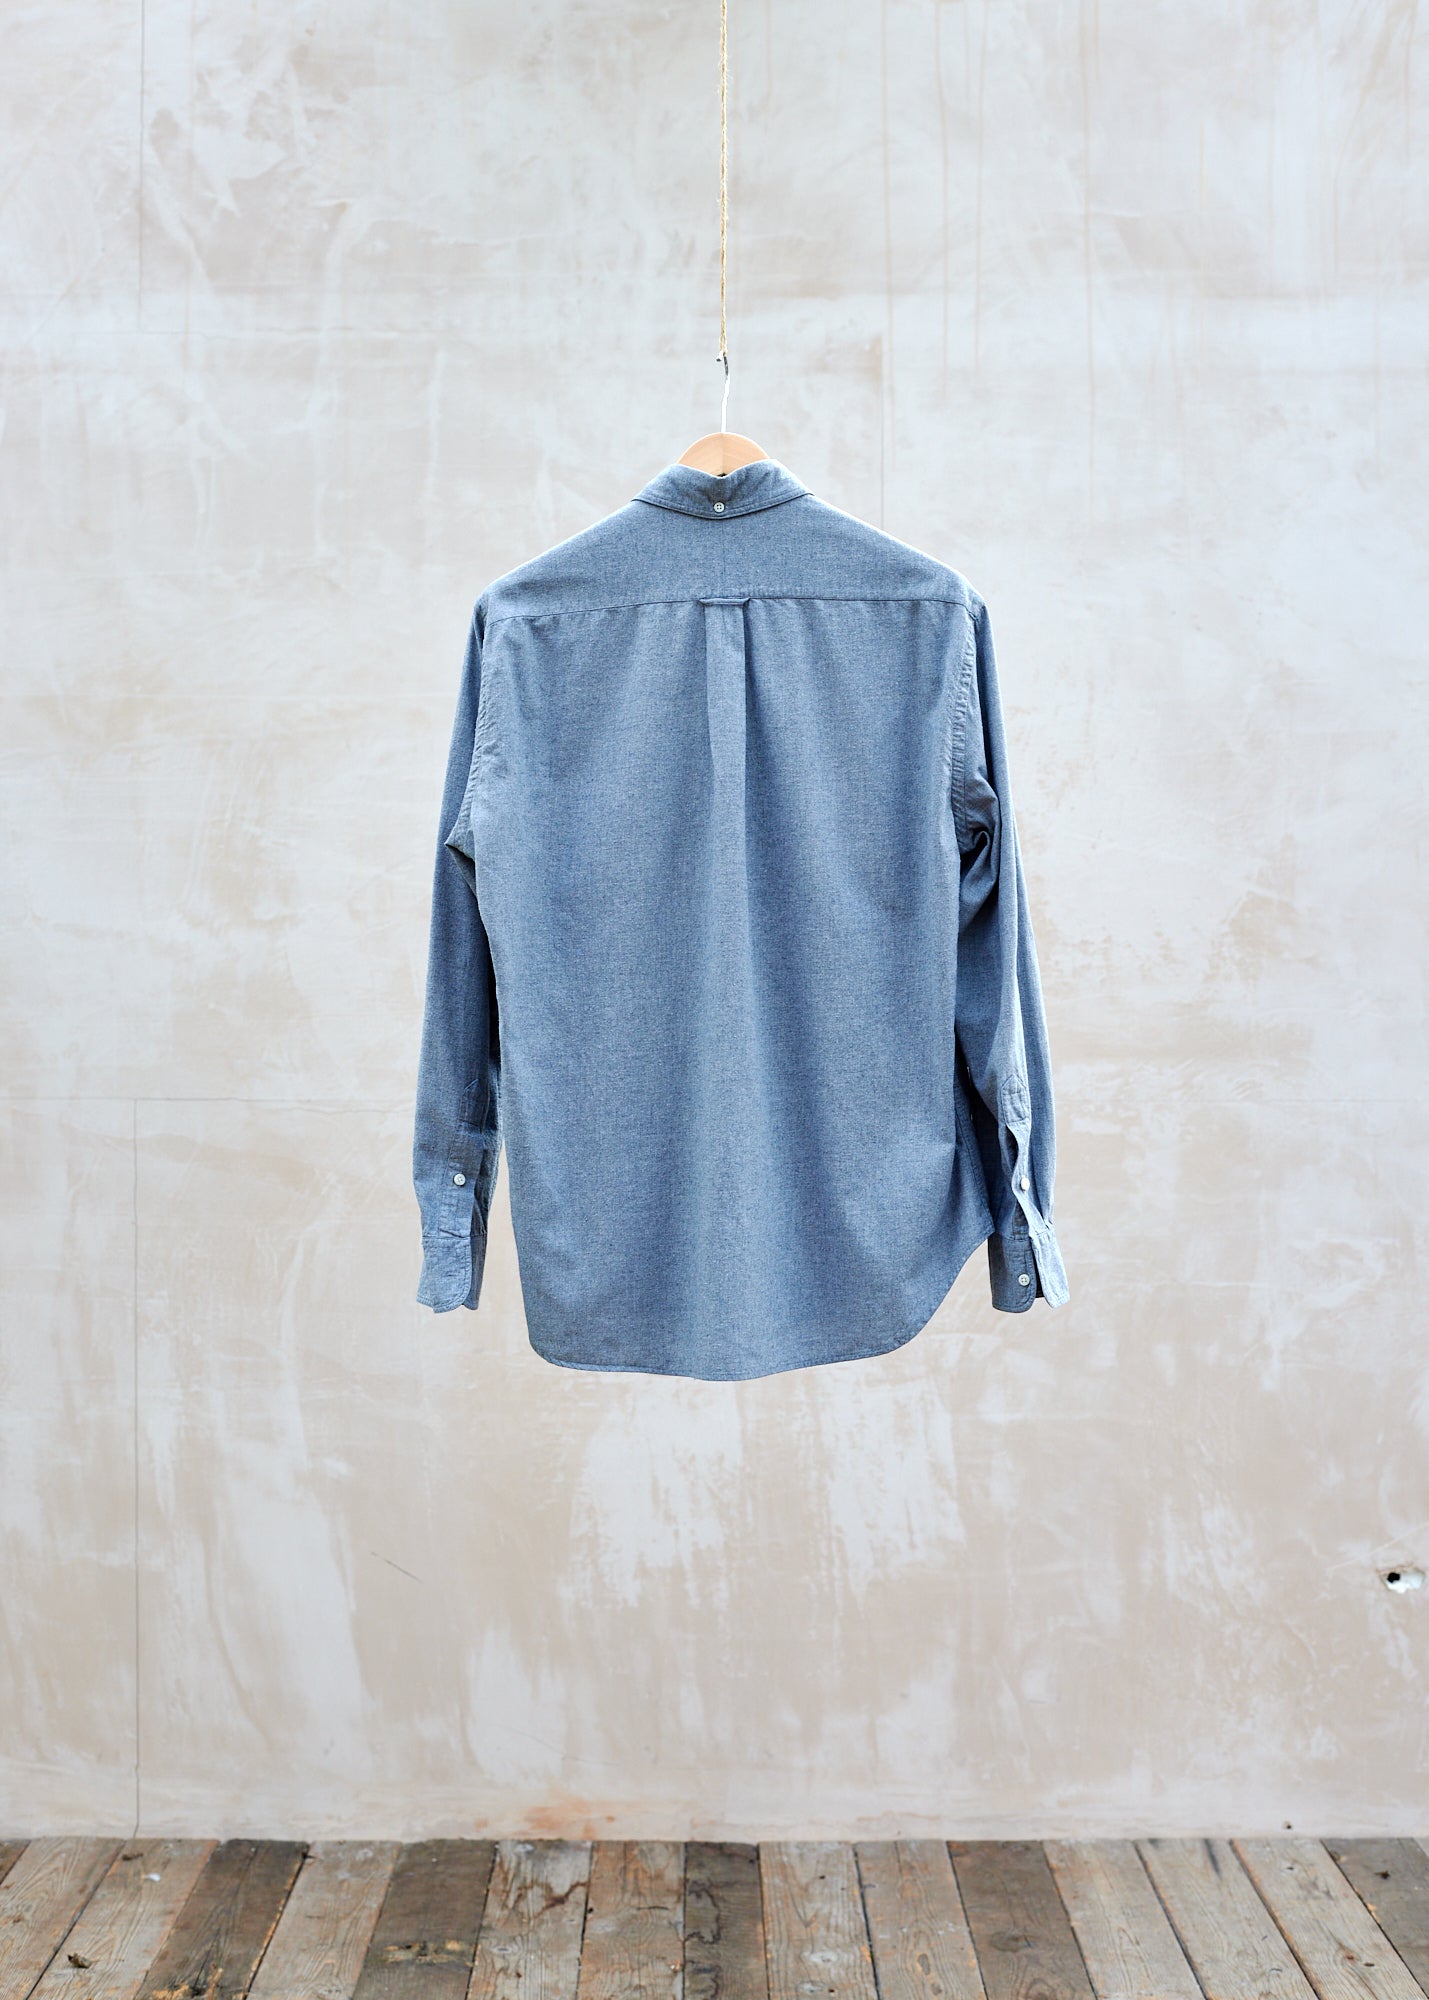 Gitman Bros. Grey Cotton Flannel Buttondown Shirt - L